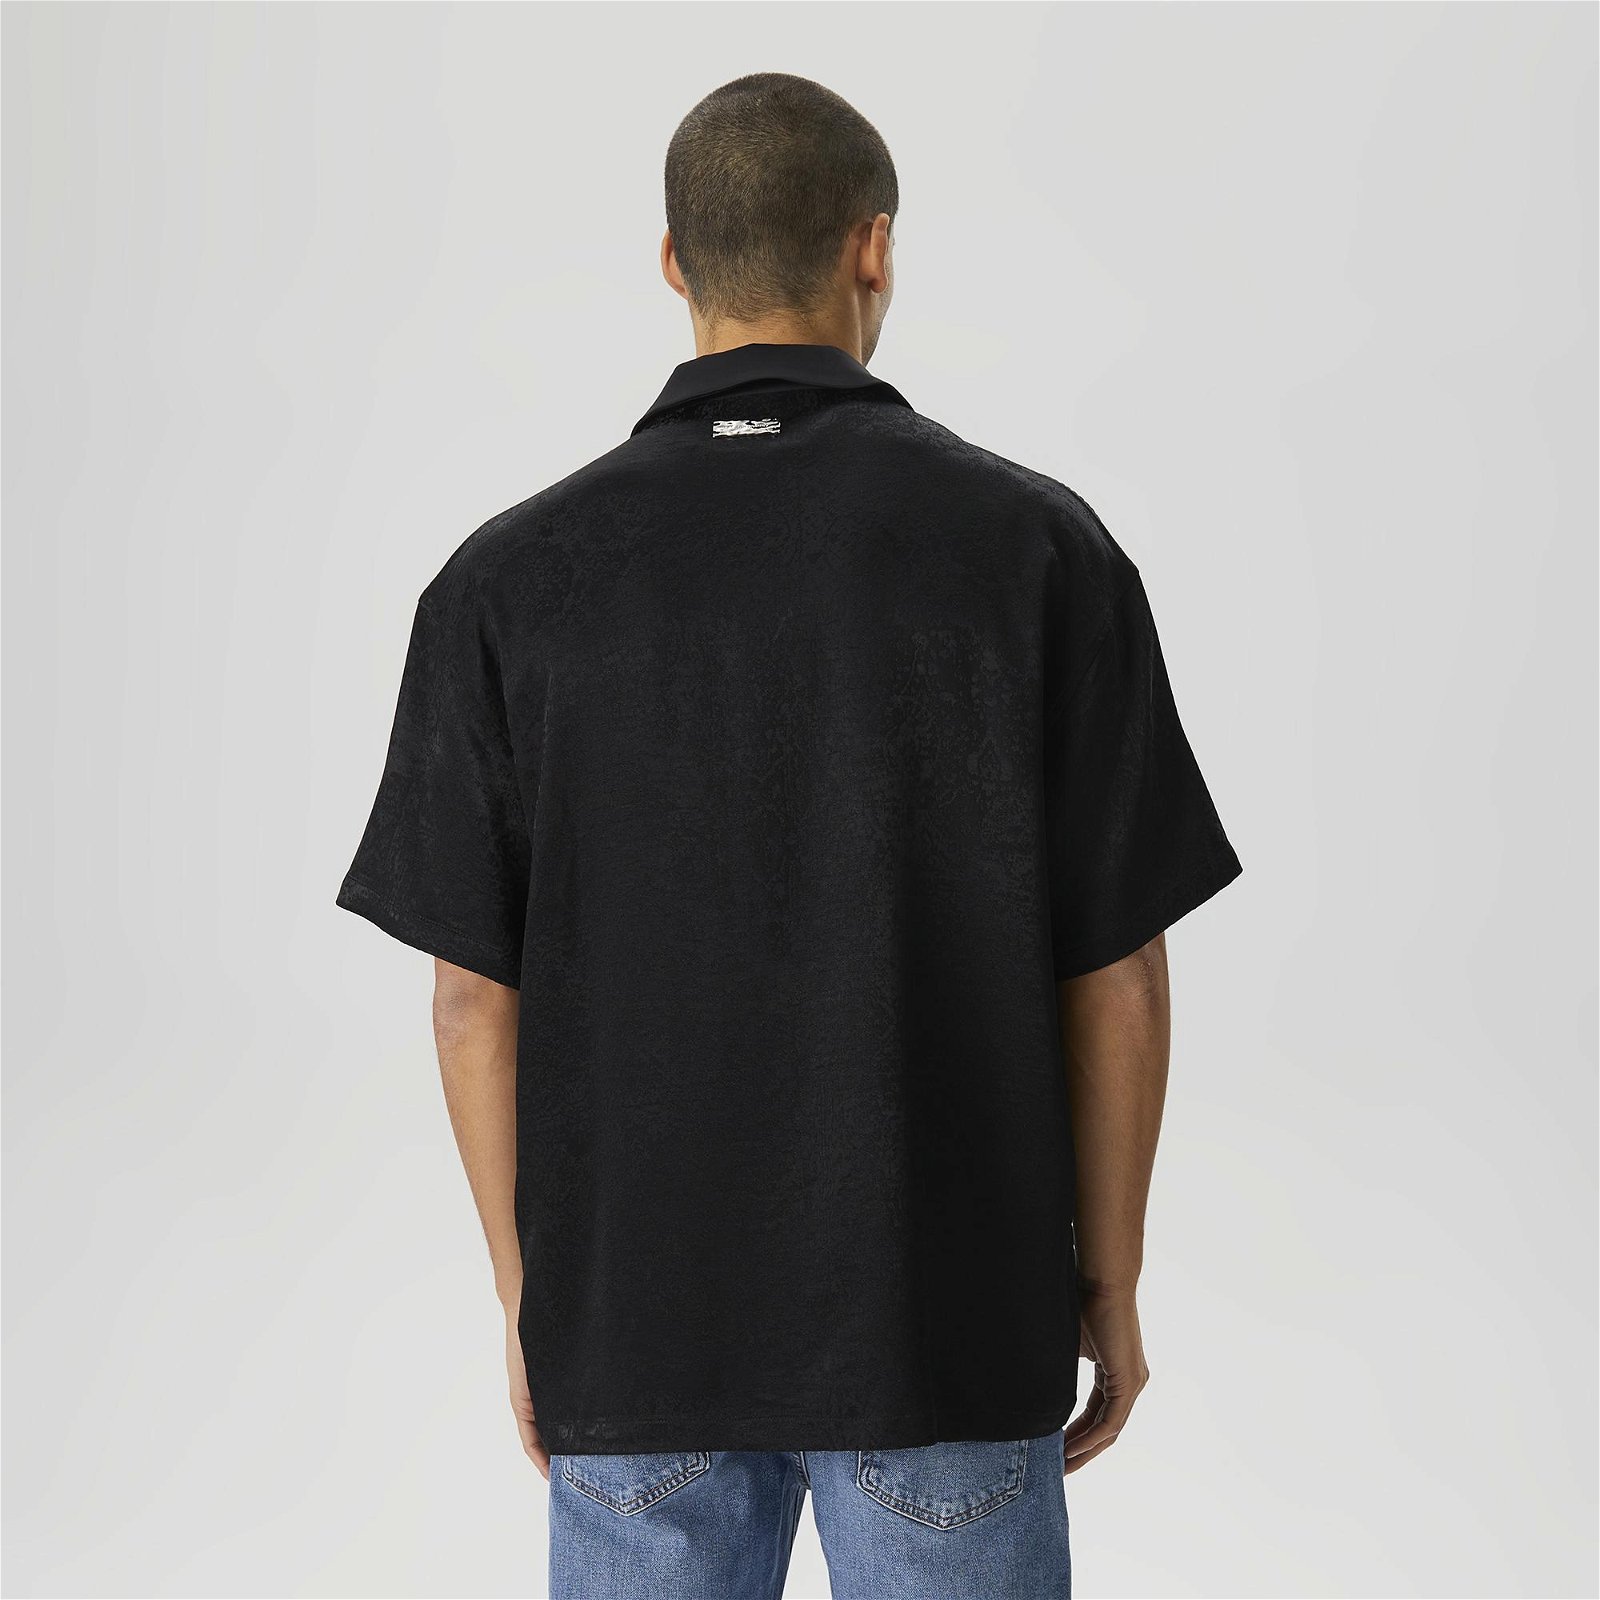 Les Benjamins 406 Unisex Siyah T-Shirt